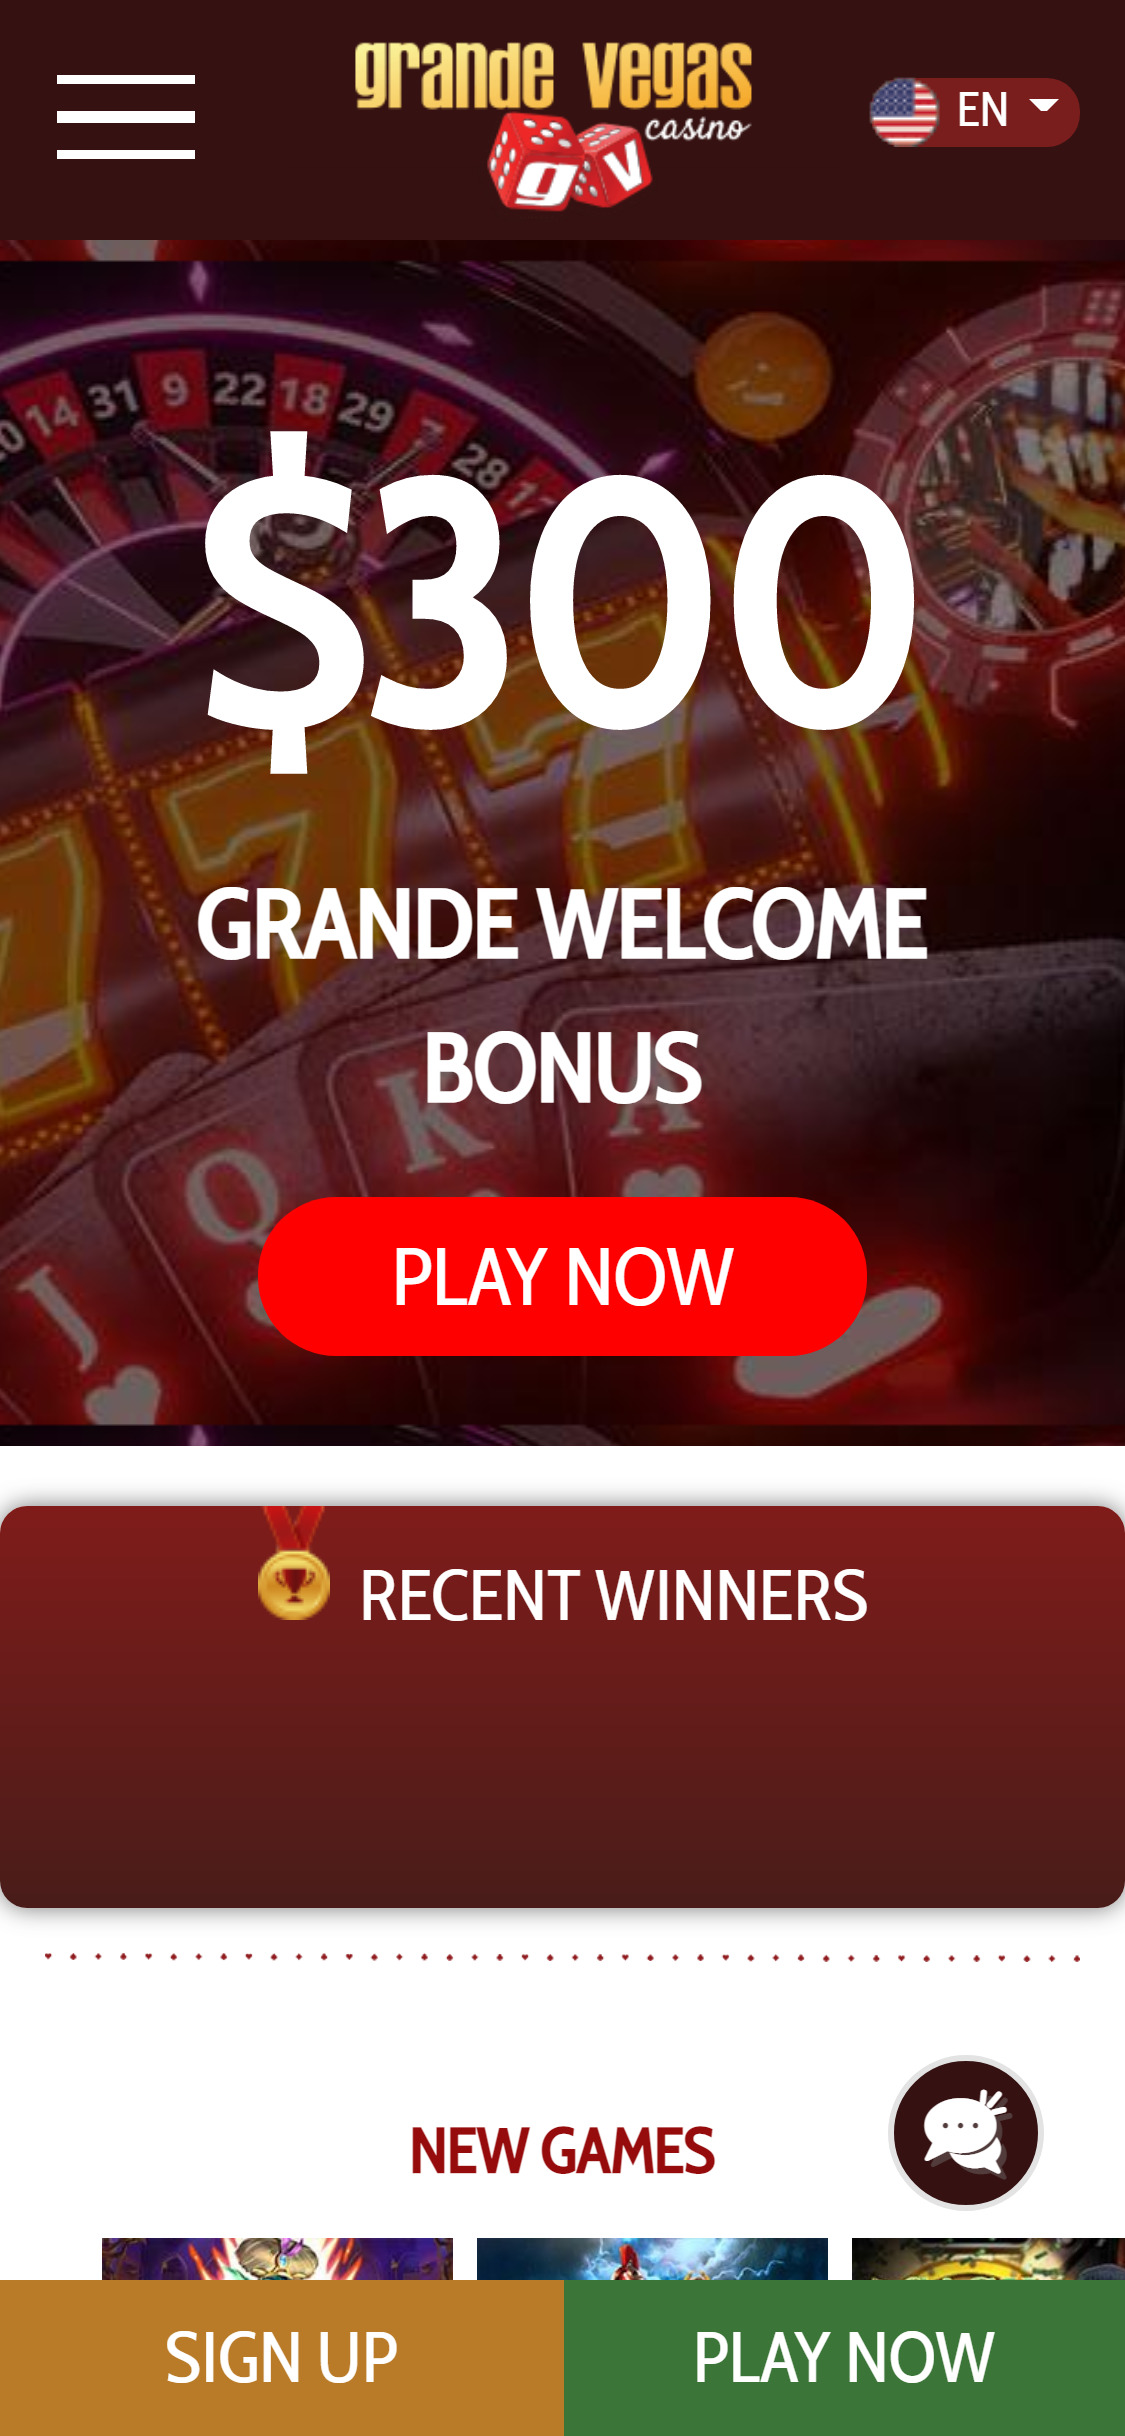 Grande Vegas Casino Mobile Review